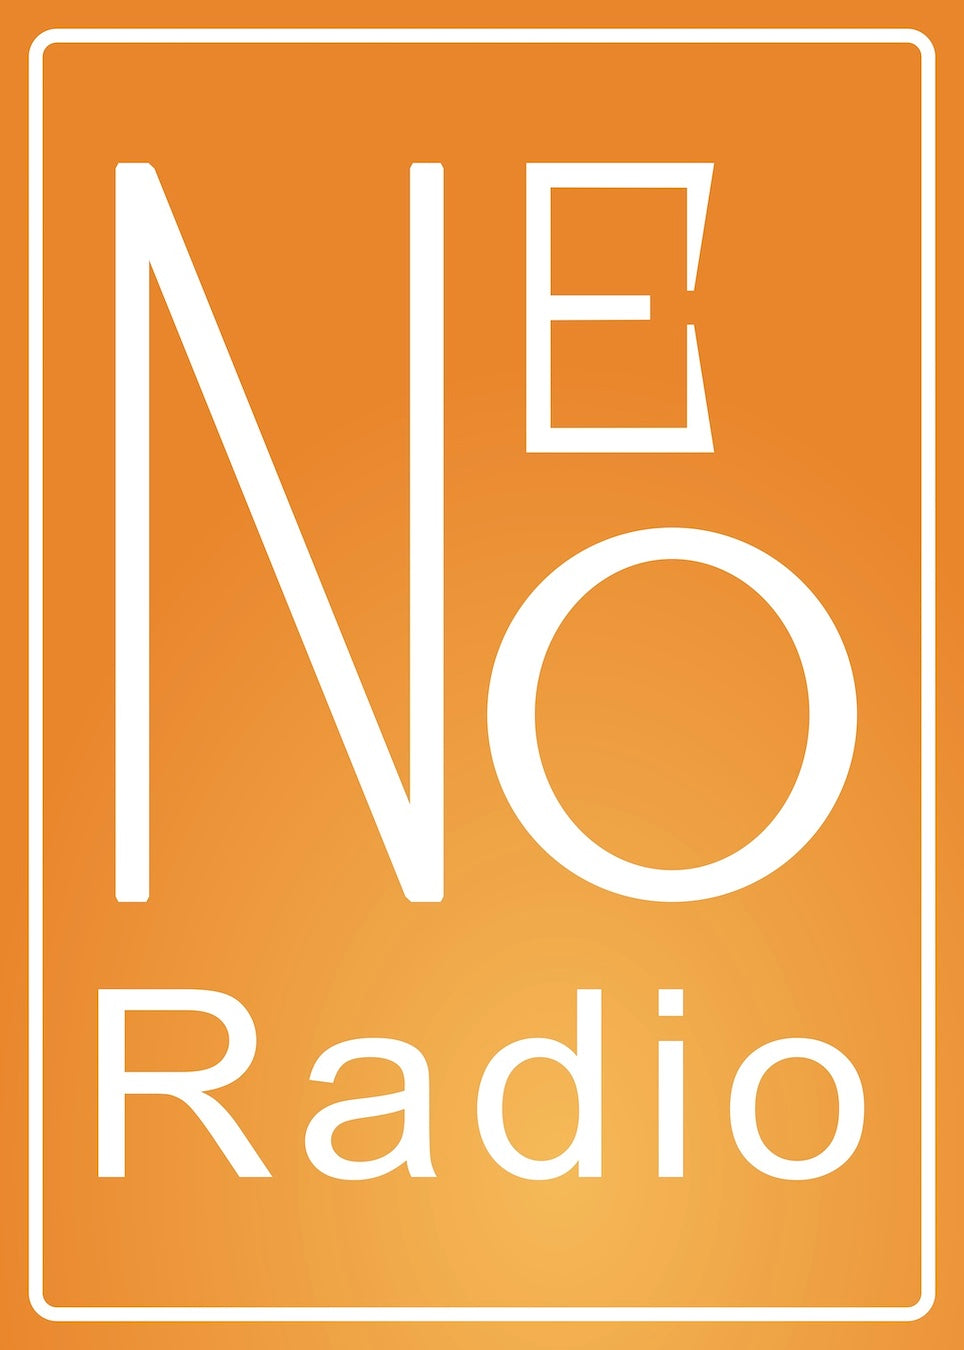 Neo Radio giver Internet Radio kanel på dit B&O anlæg - B&O Radio